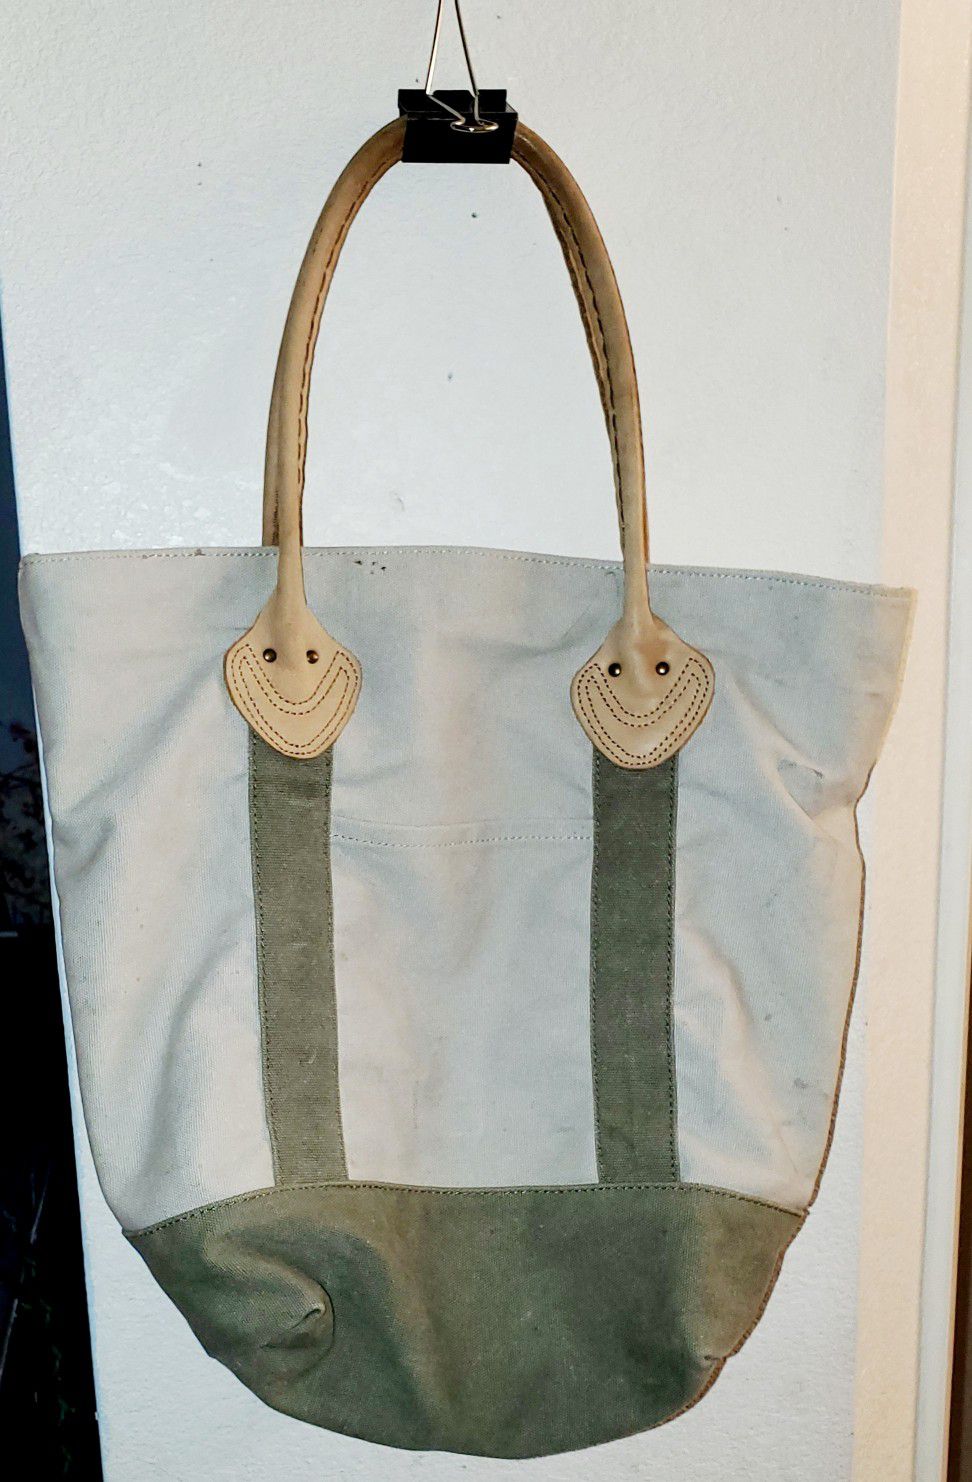 LL bean tote bag with pockets